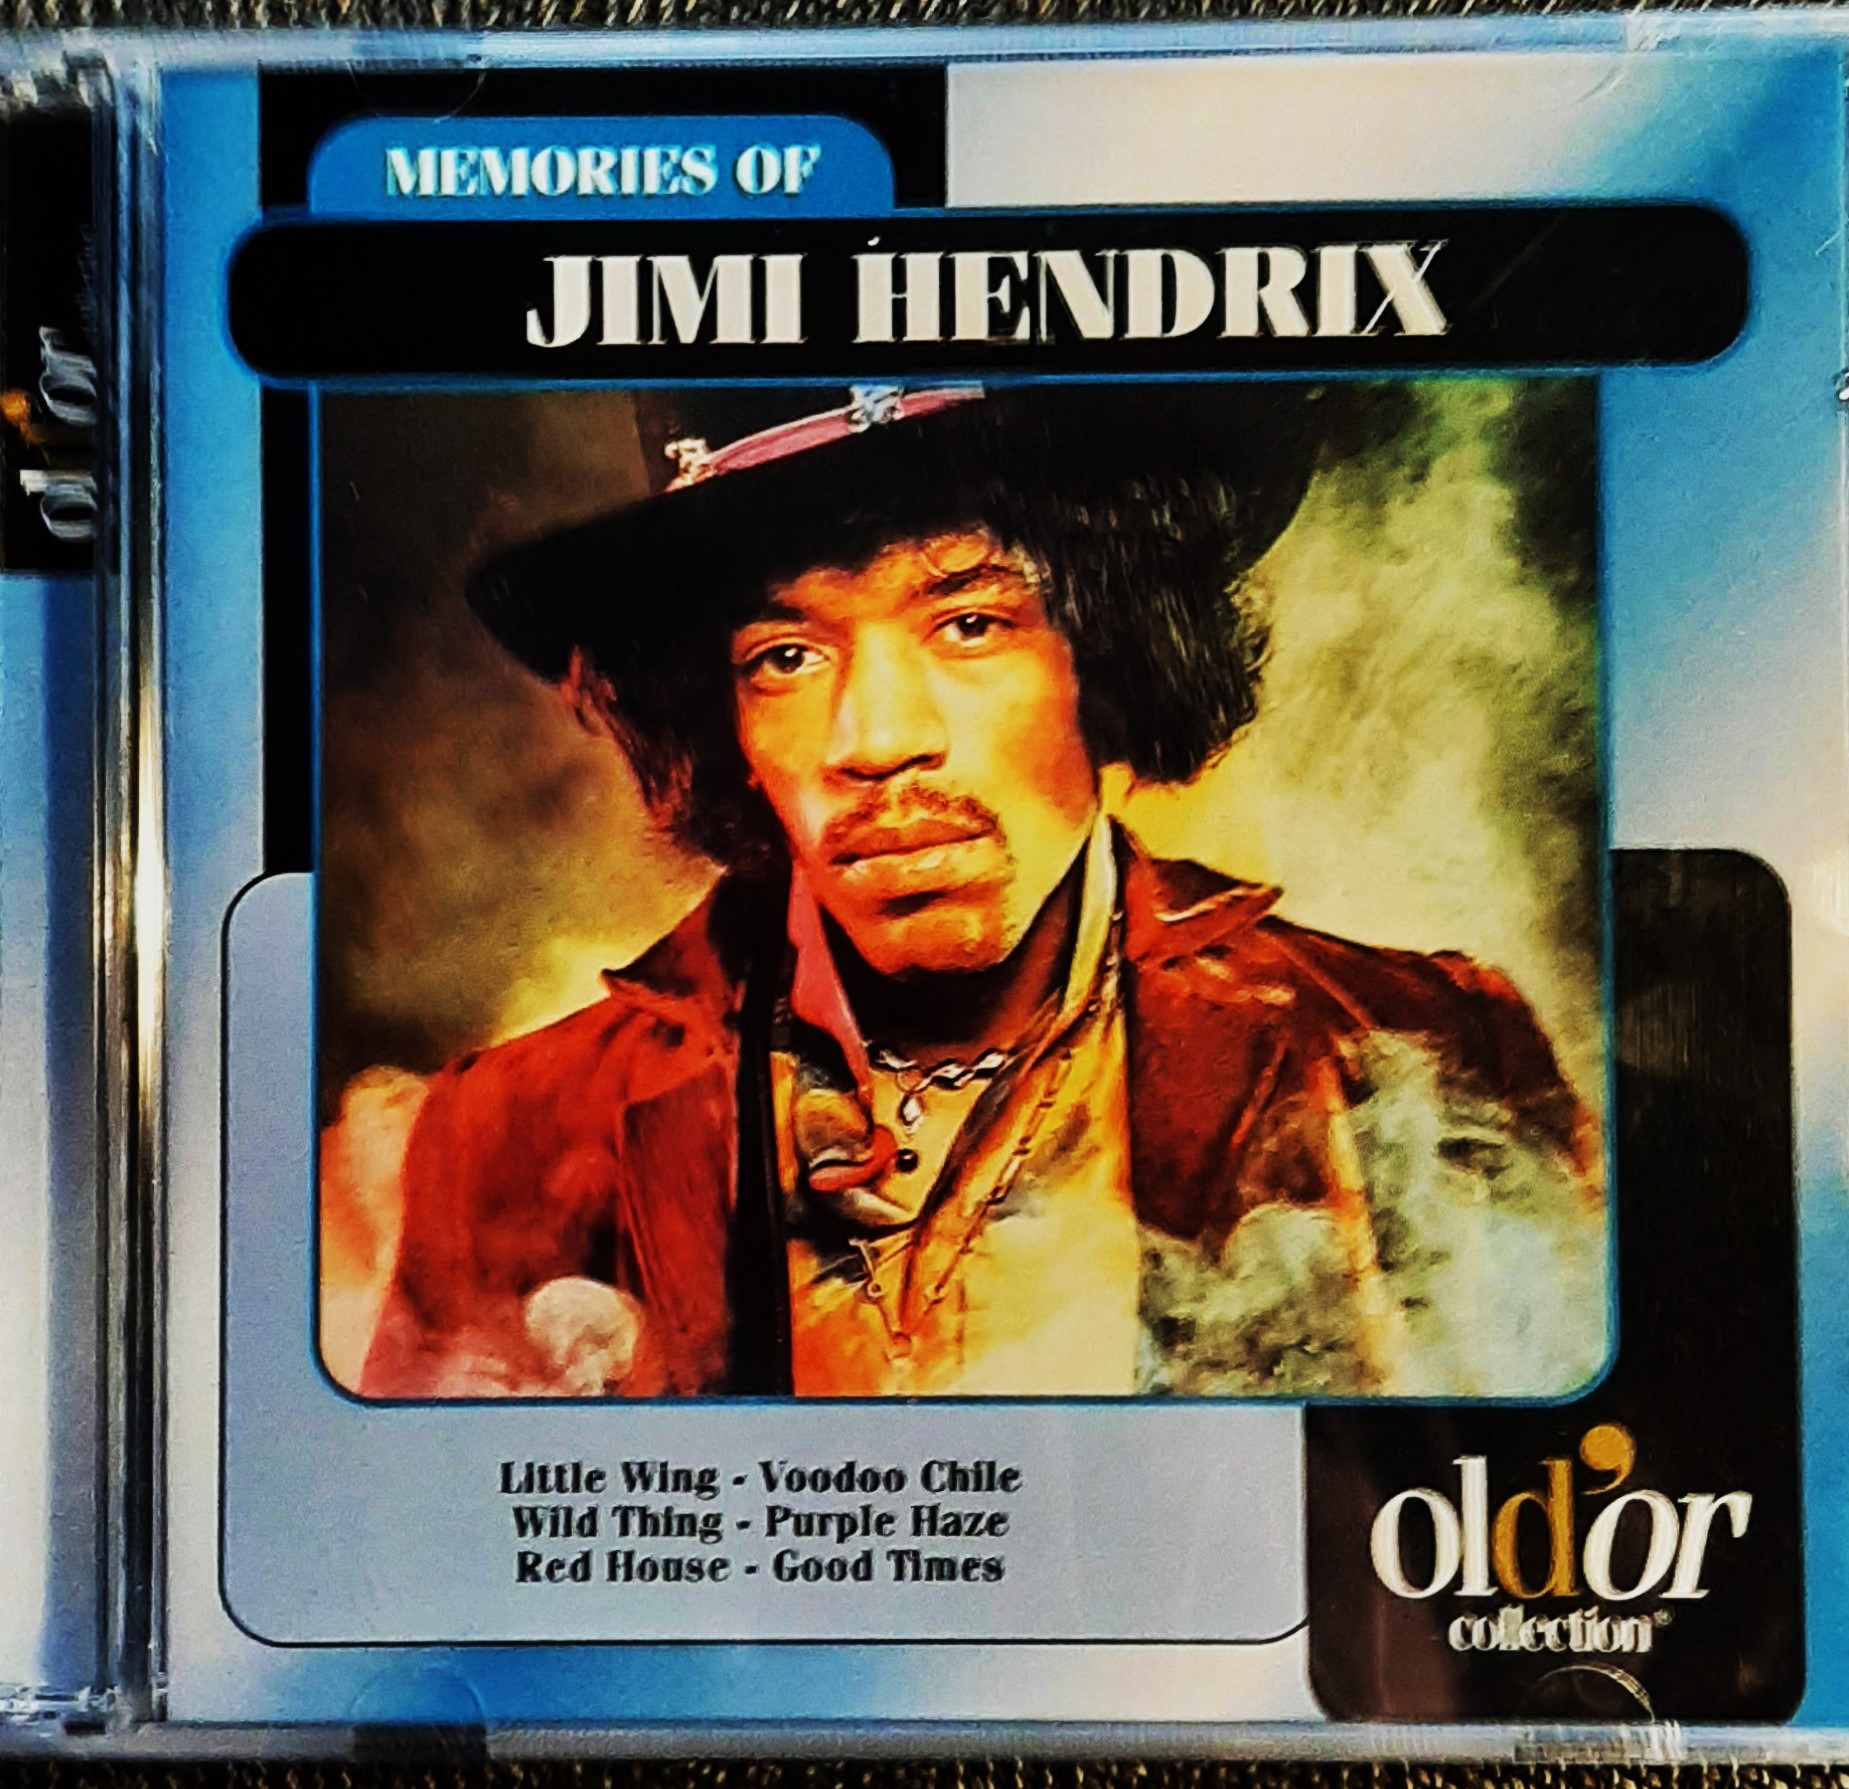 Polecam Znakomity Album 2X CD -JIMI HENDRIX - Album Memories Jimi Hendrix CD